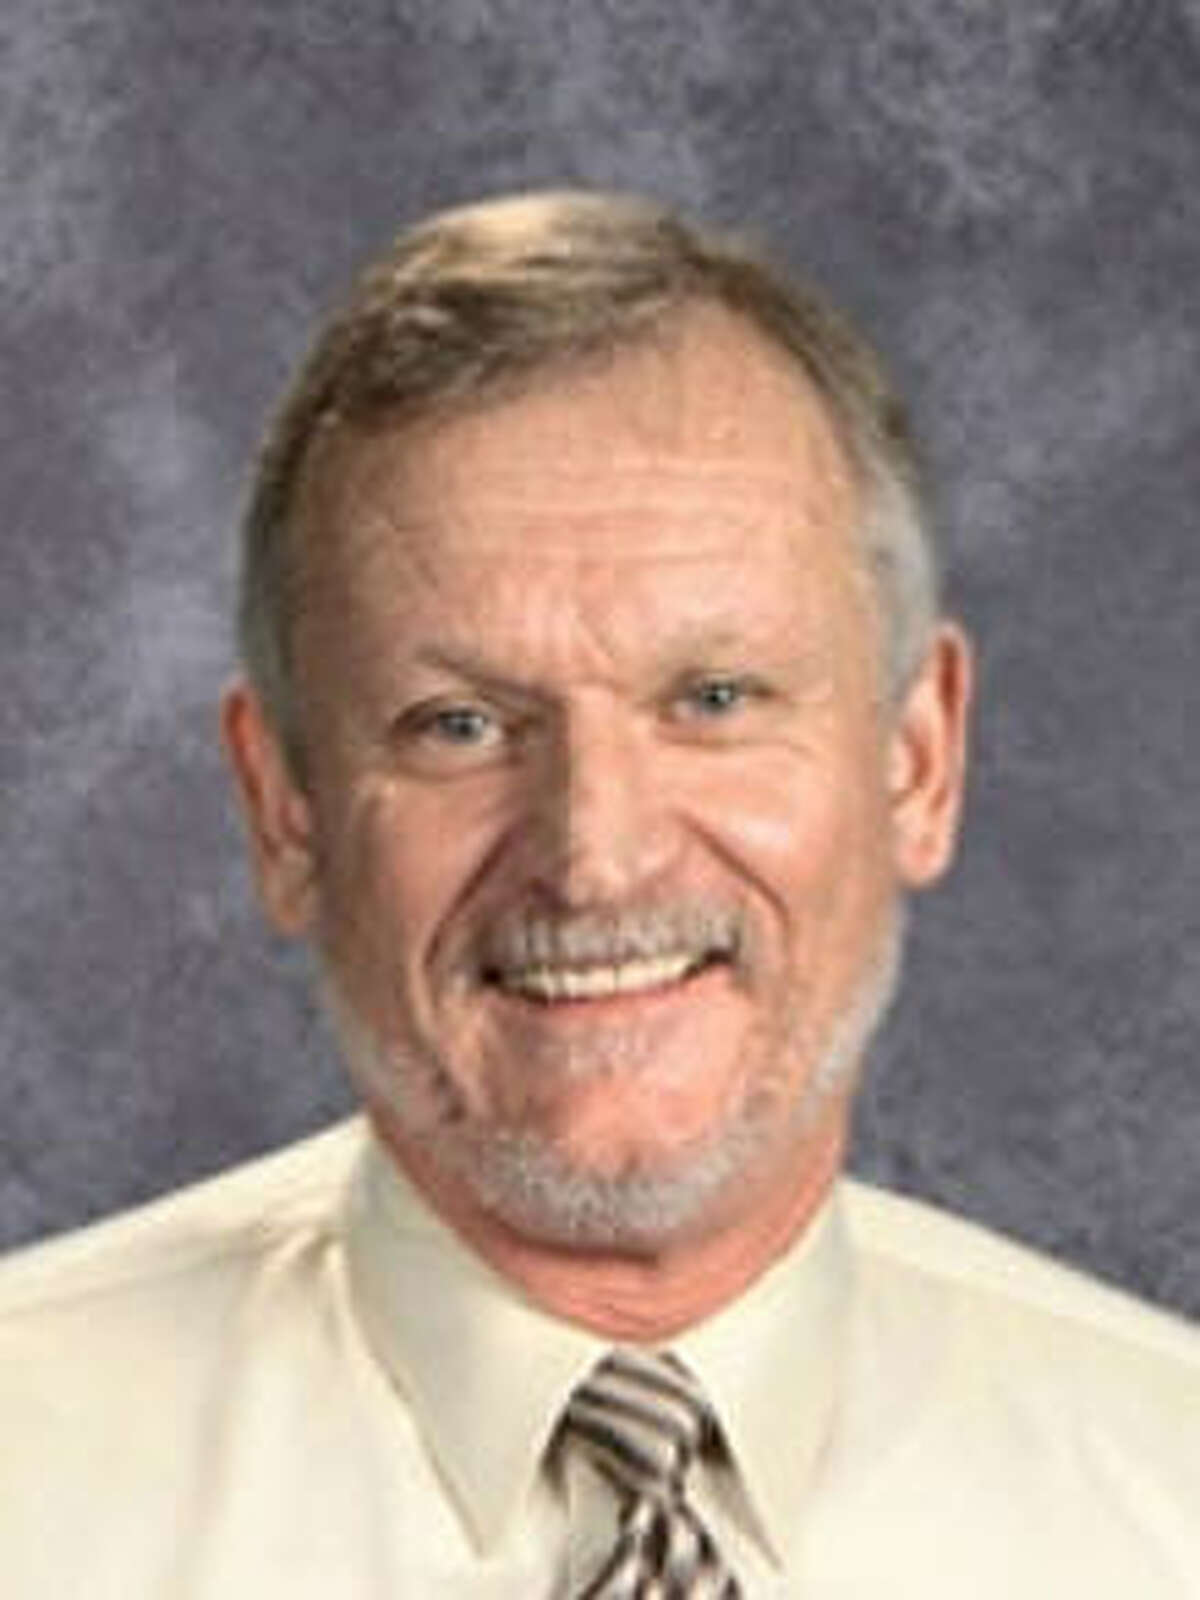 41. Langham Creek High School Principal: David Hughes Salary: $137,080.00 School district: Cypress-Fairbanks ISD